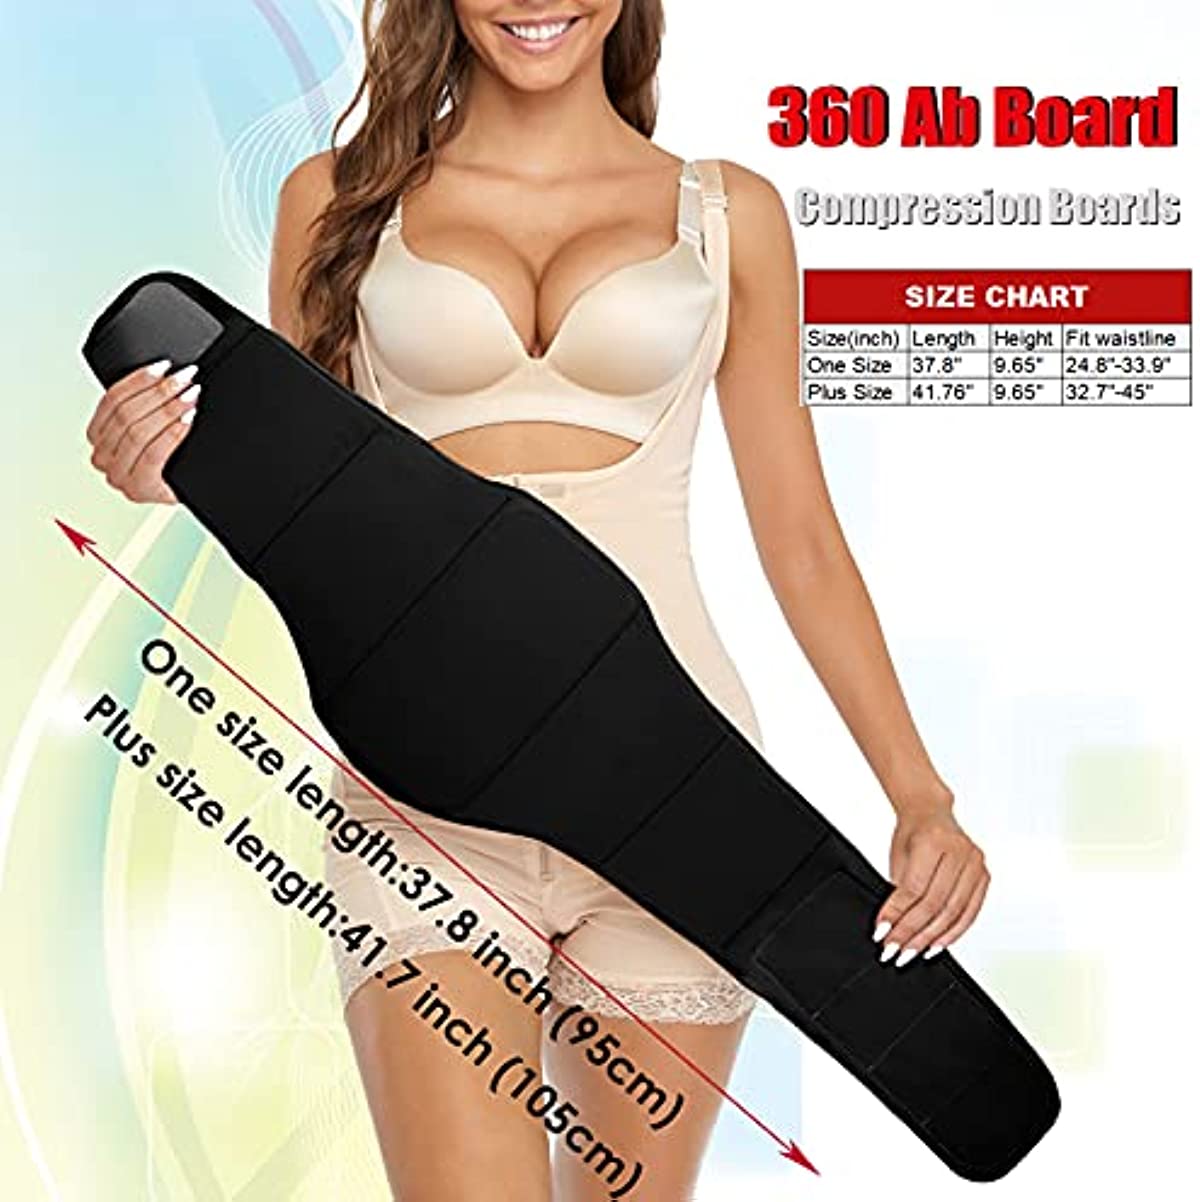 Abdominal Board 360 Lipo Foam Ab Board Post Surgery Liposuction Waist Belly Wrap Board for Lipo Recovery (One Size fit waist 24\"-33.8\", Black)